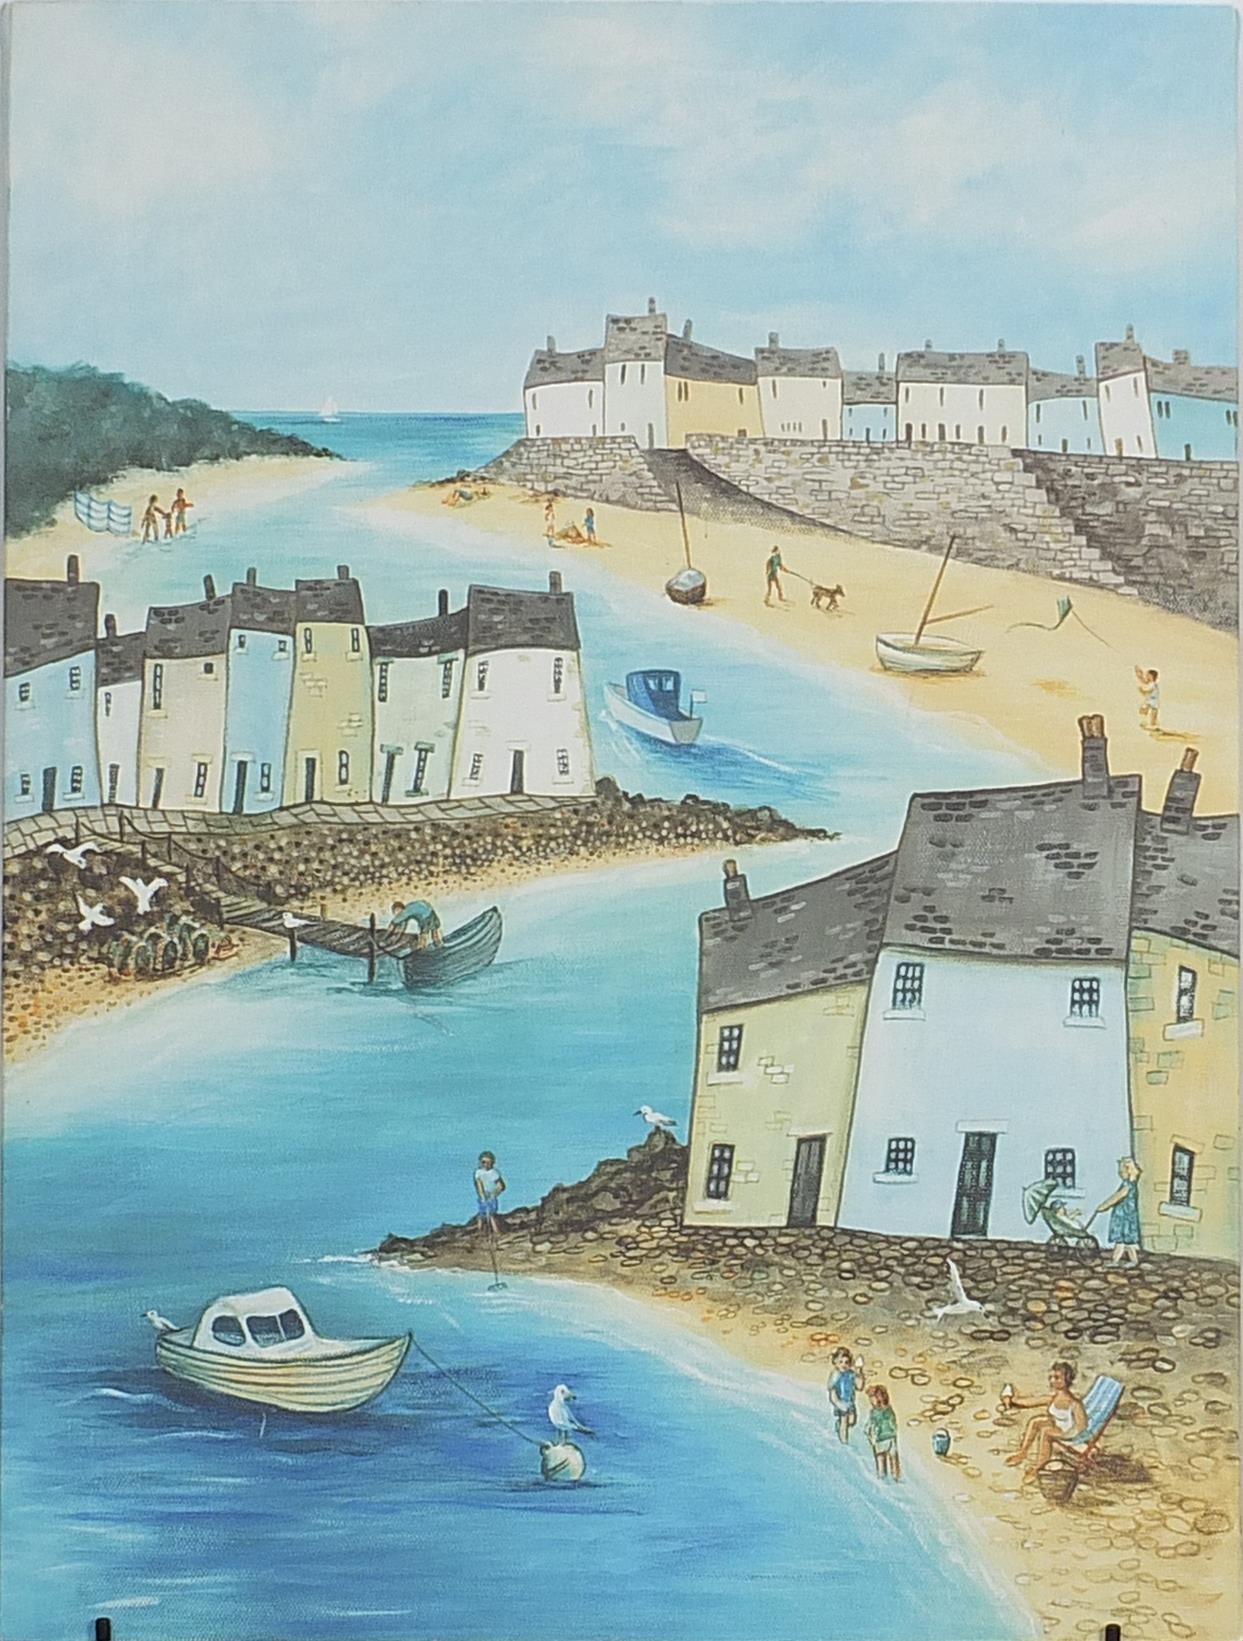 Cornish seaside town, oil on canvas print, 83cm x 60cm